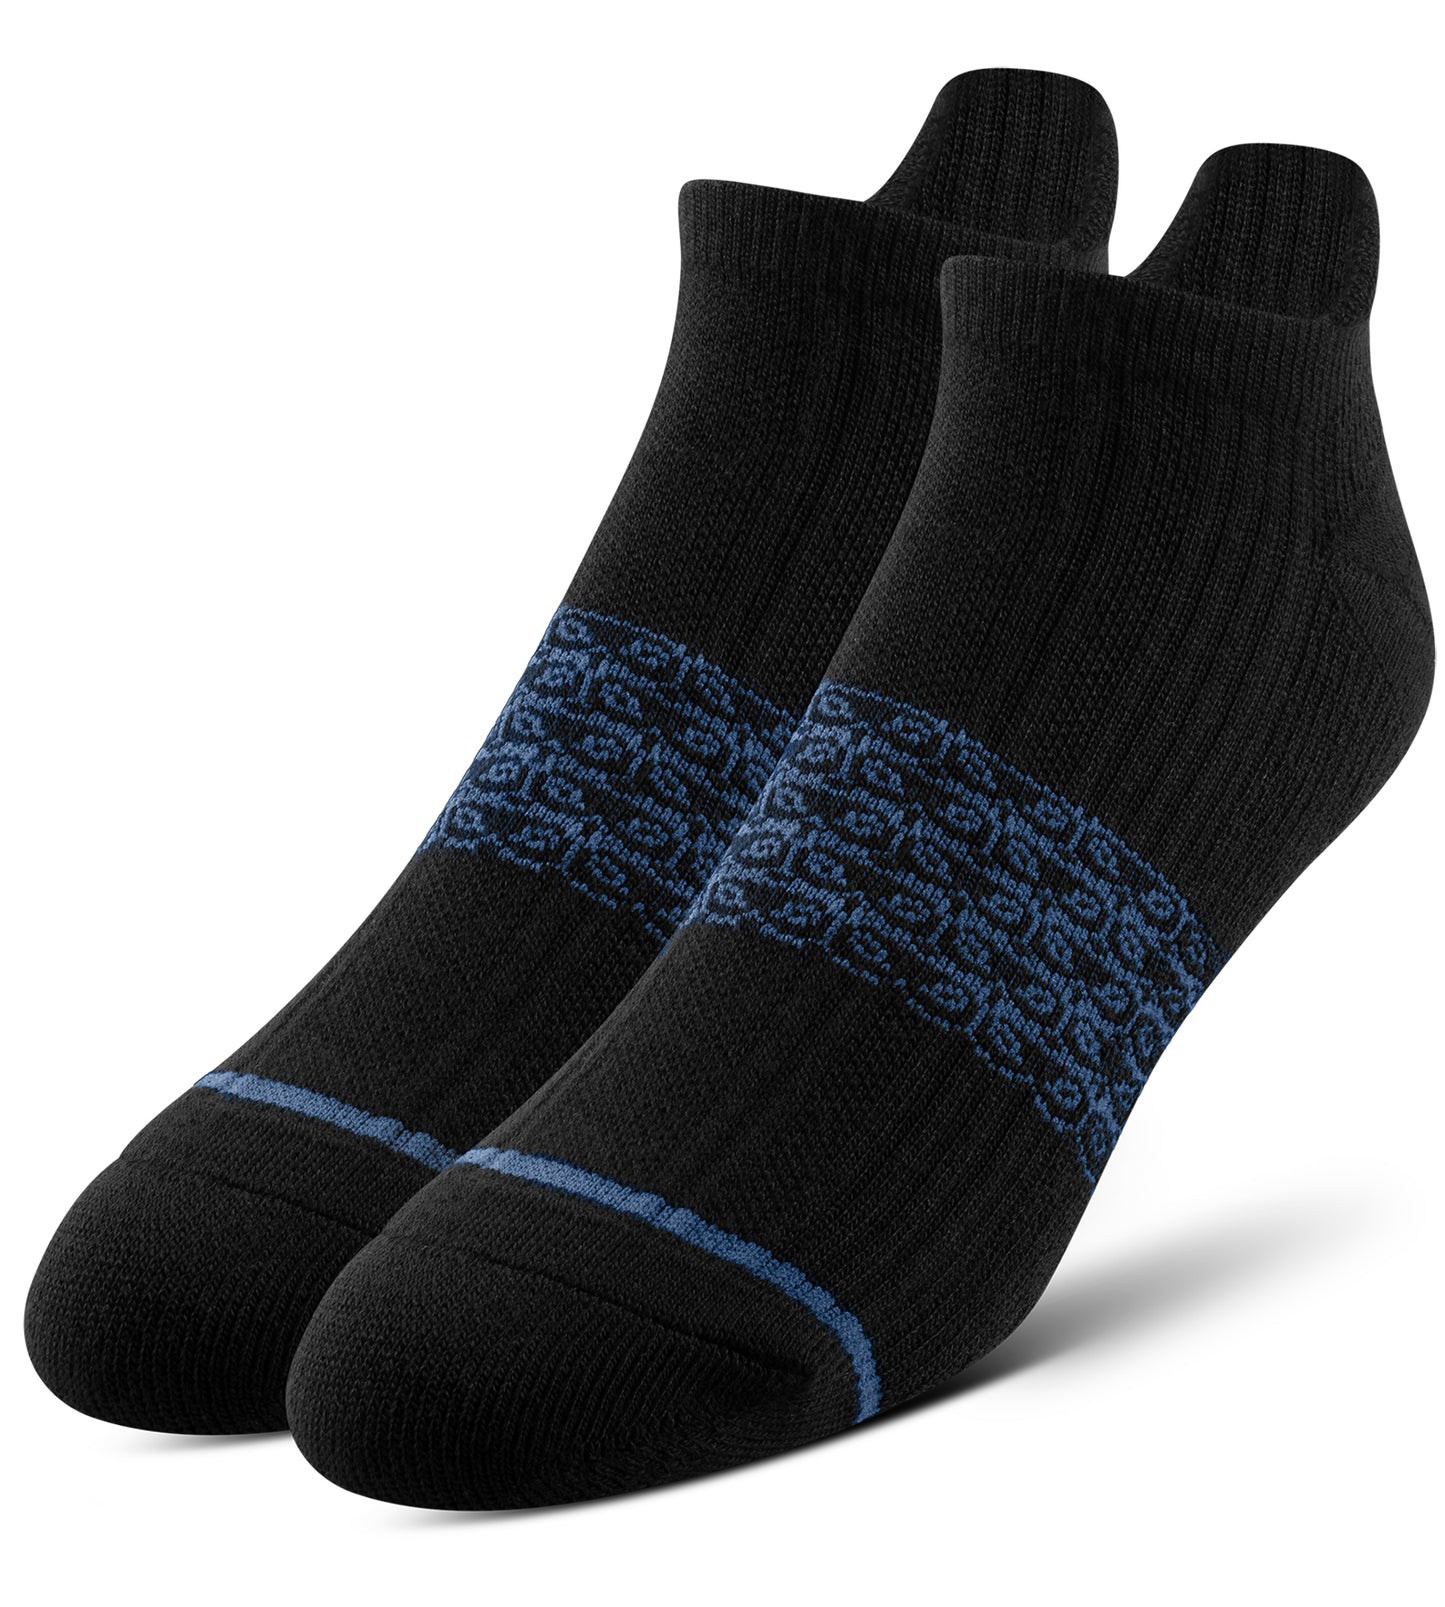 Men’s Cushion Low Cut Socks 6 Pack, black with blue